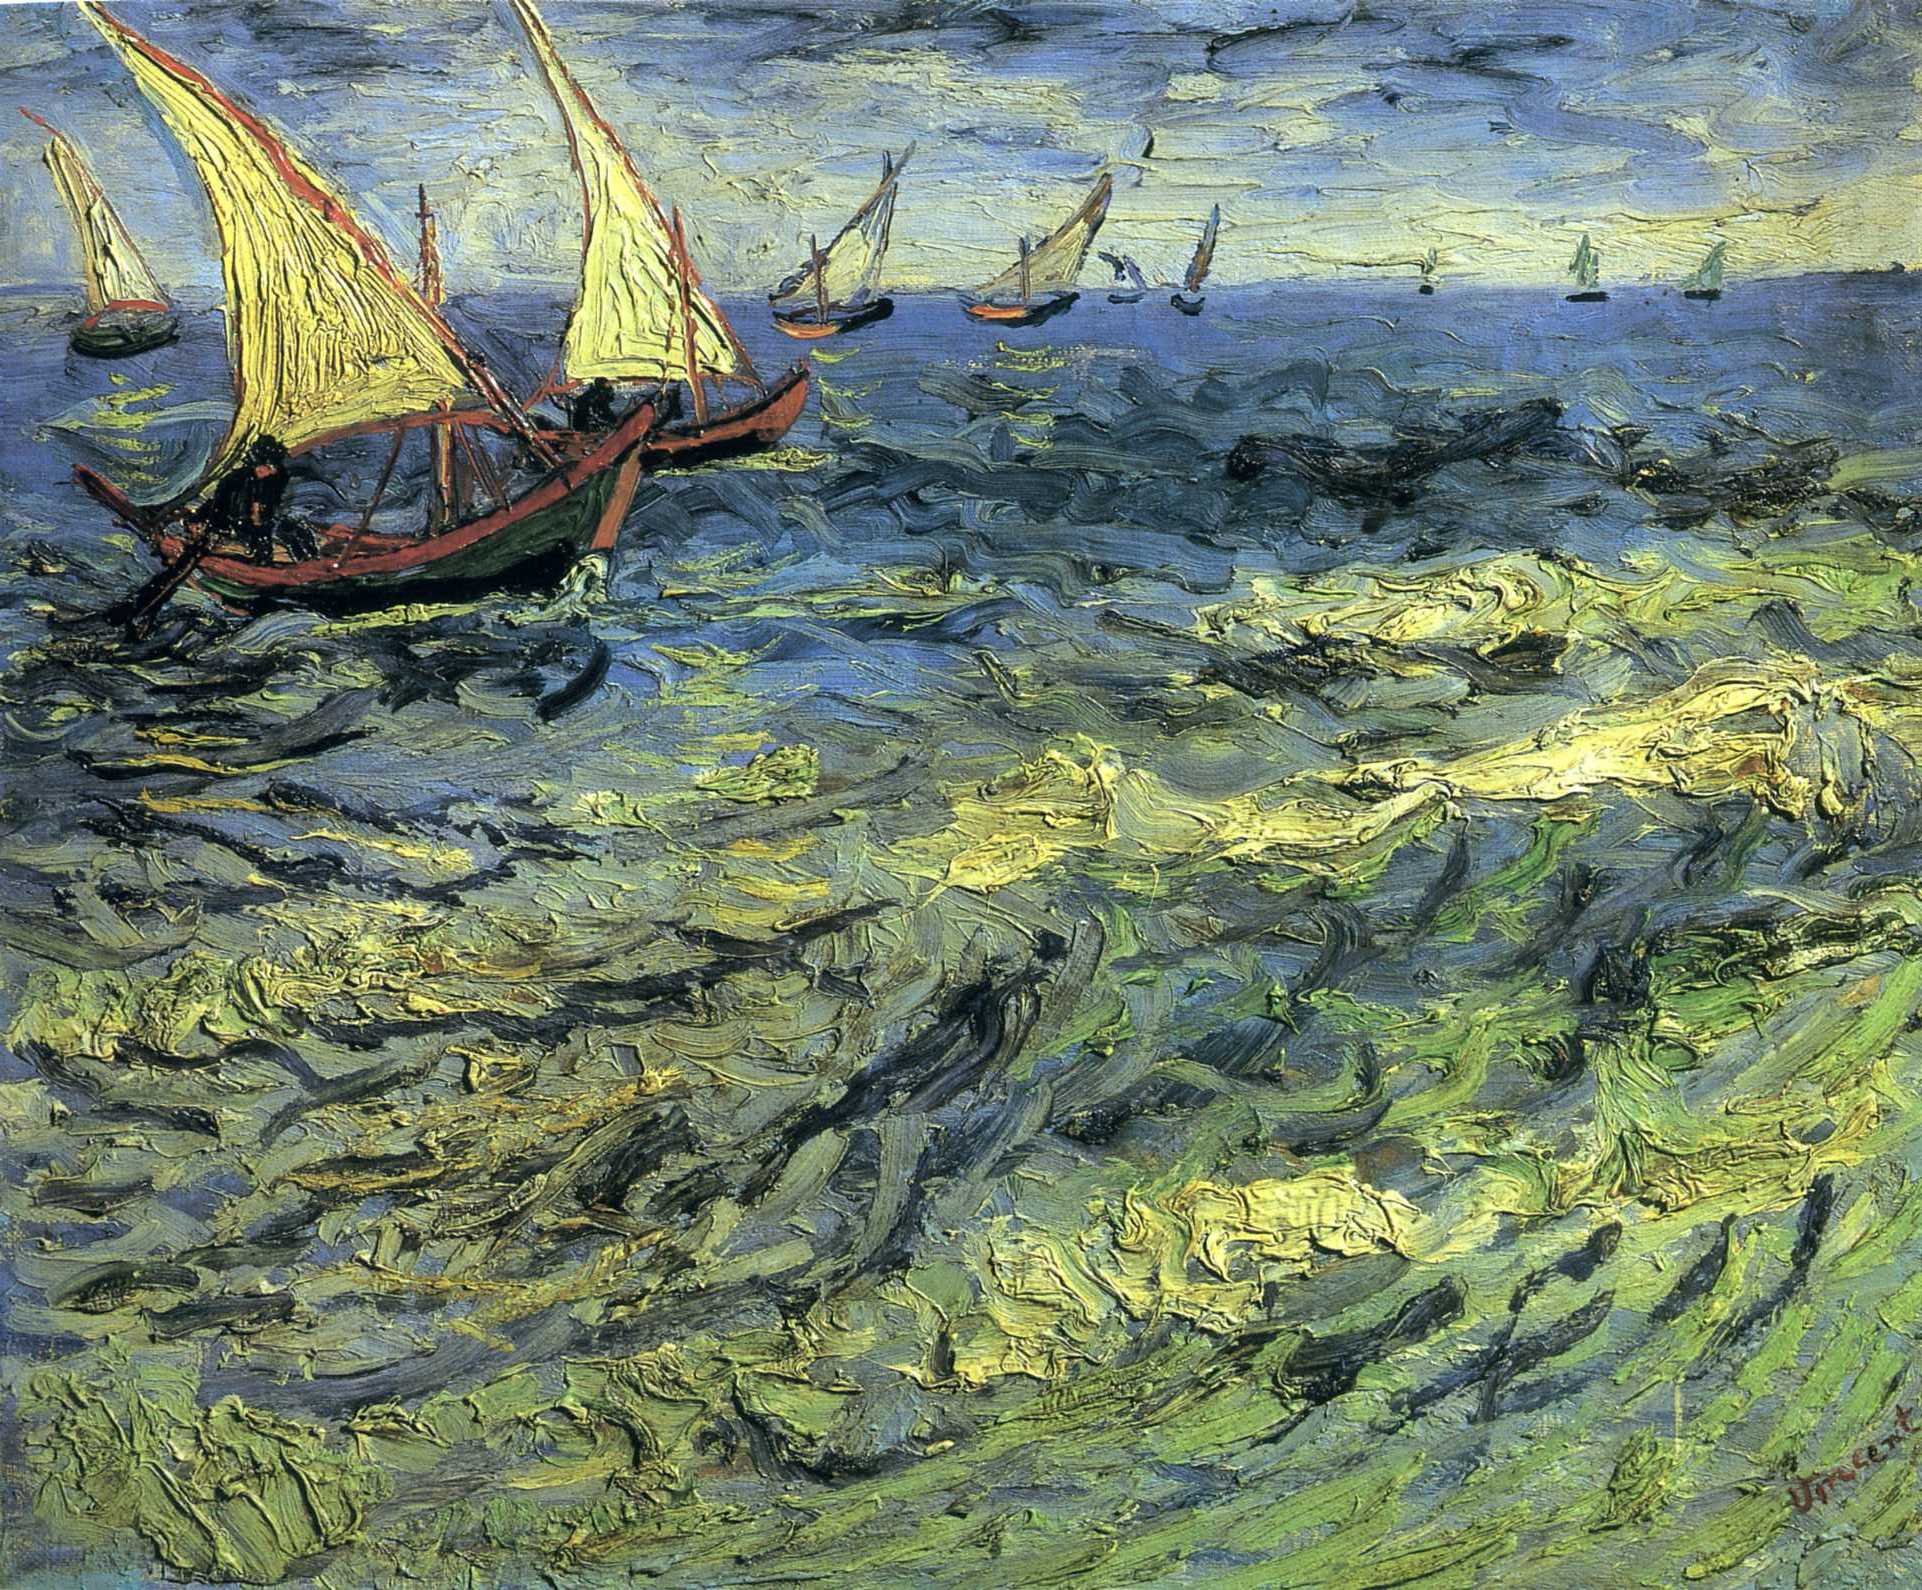 海上的漁船 by Vincent van Gogh - 1888 - 44 x 53 厘米 